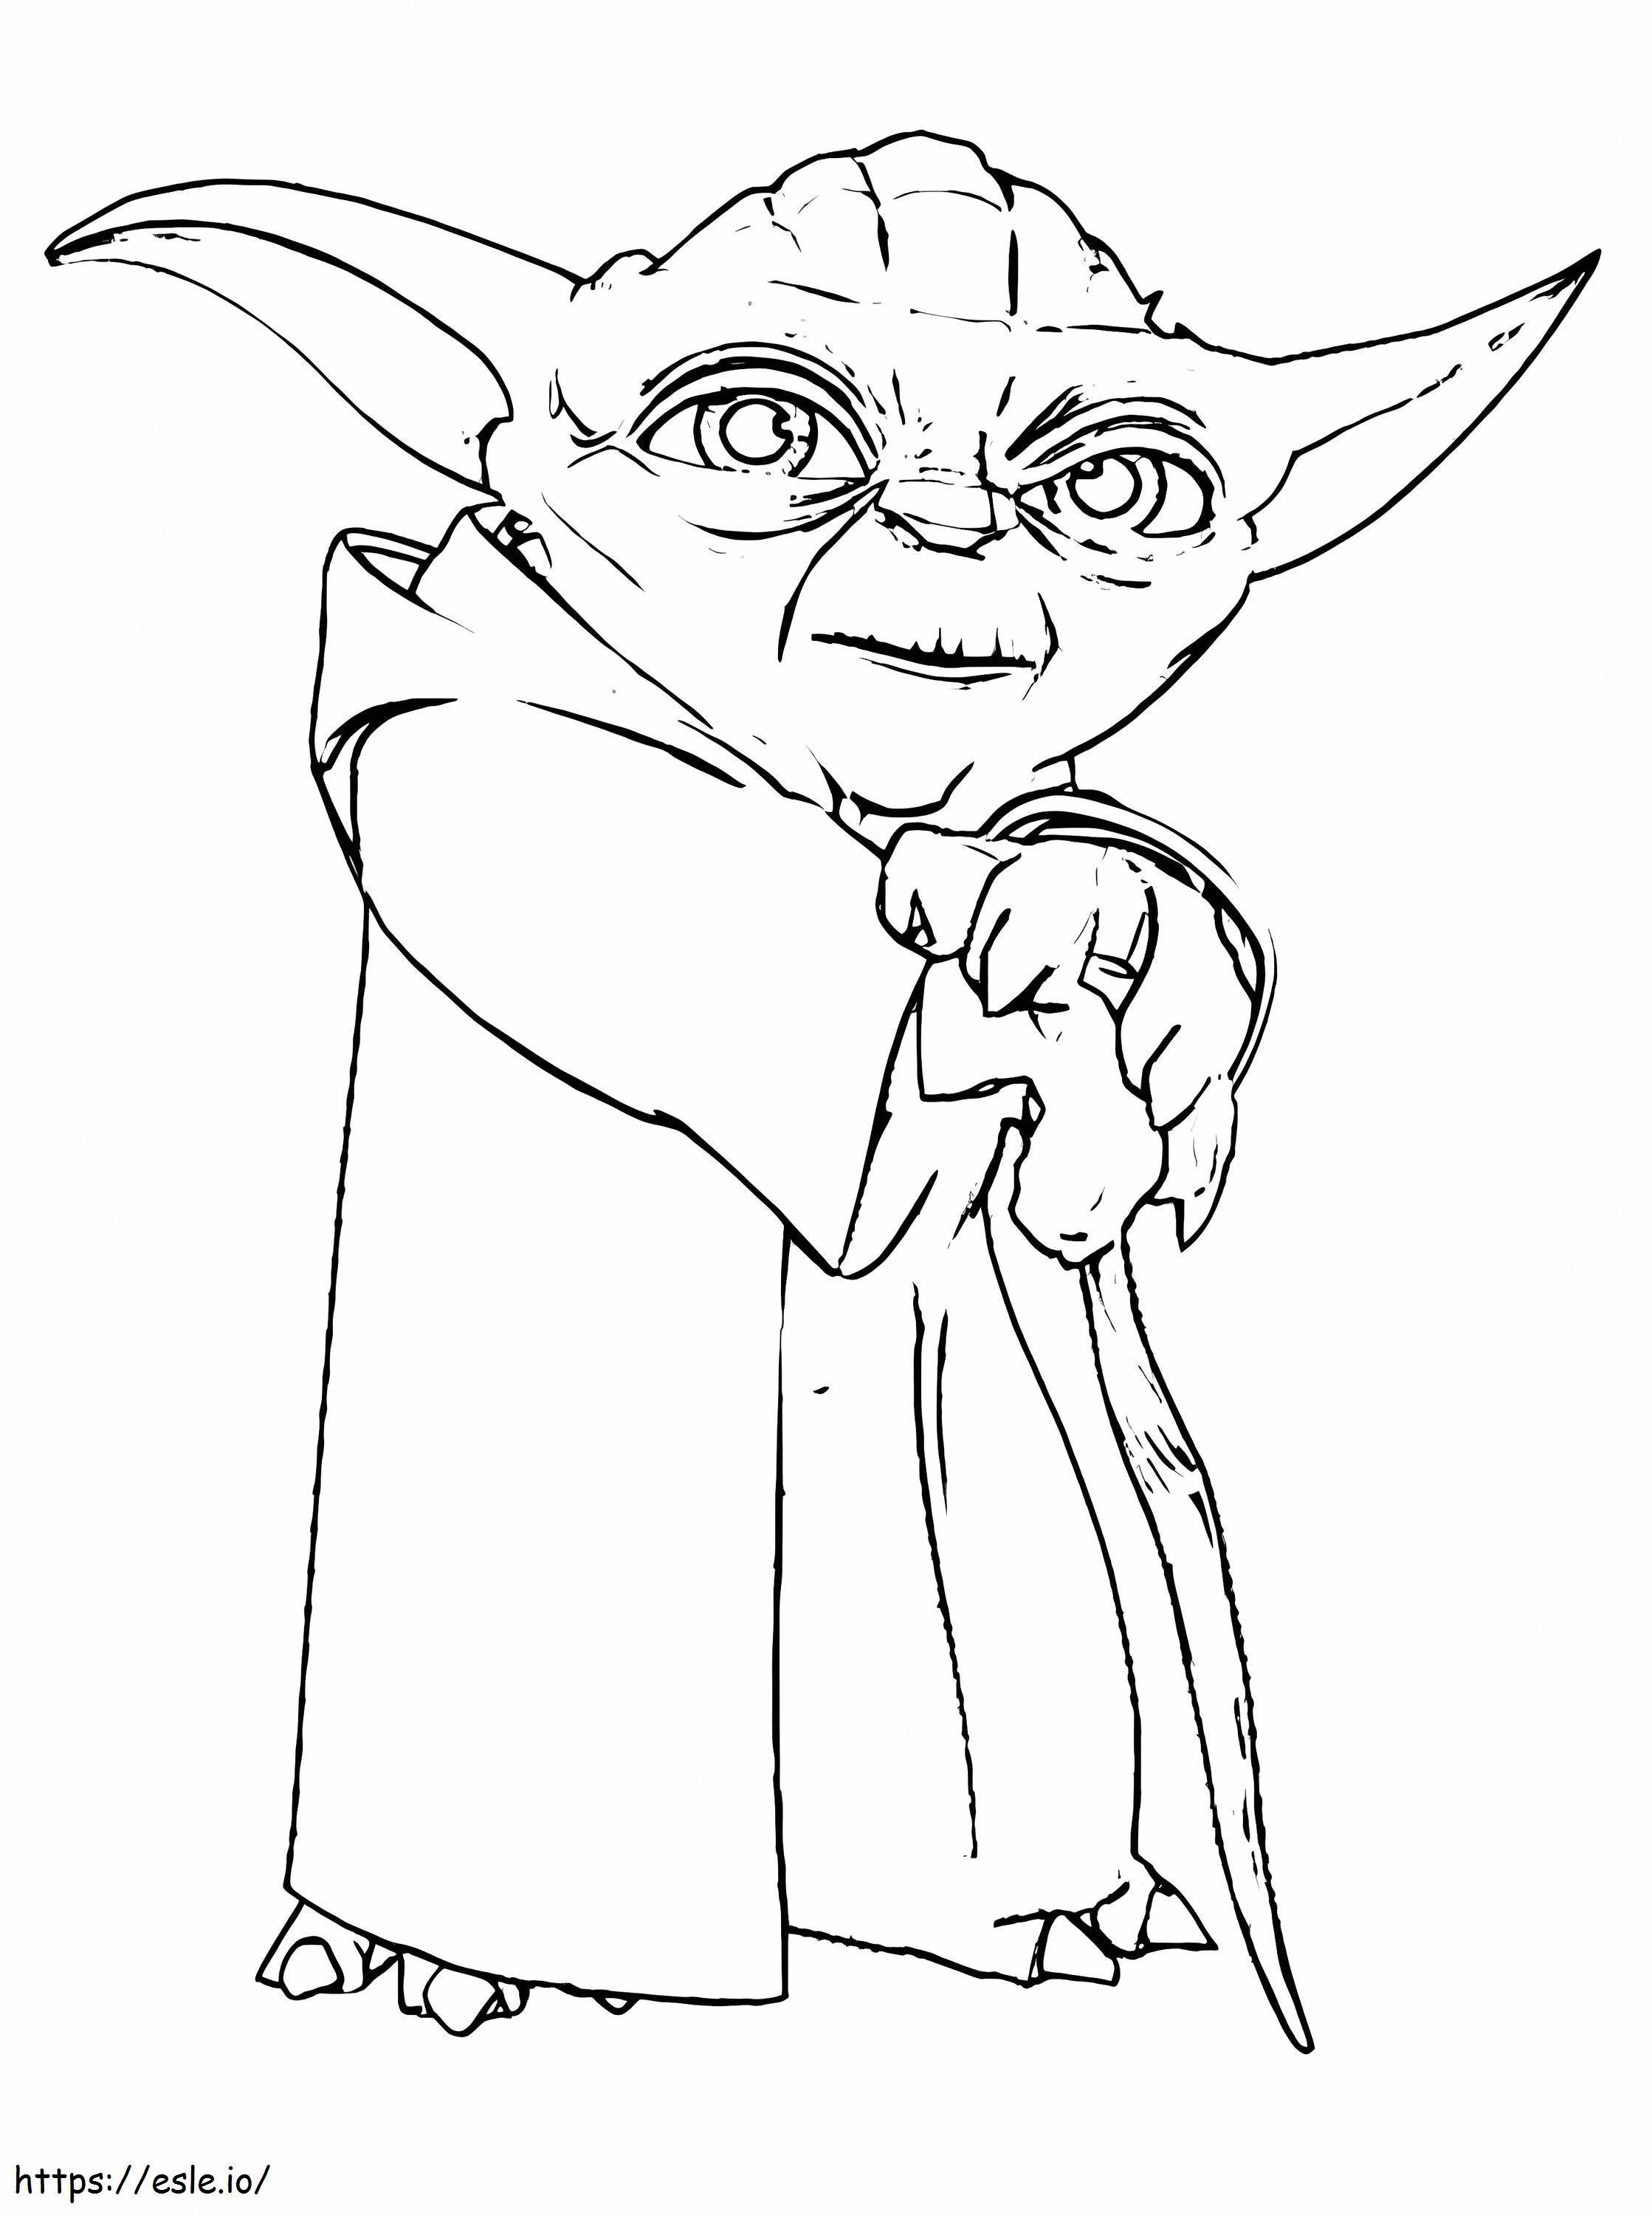 Cool Master Yoda coloring page